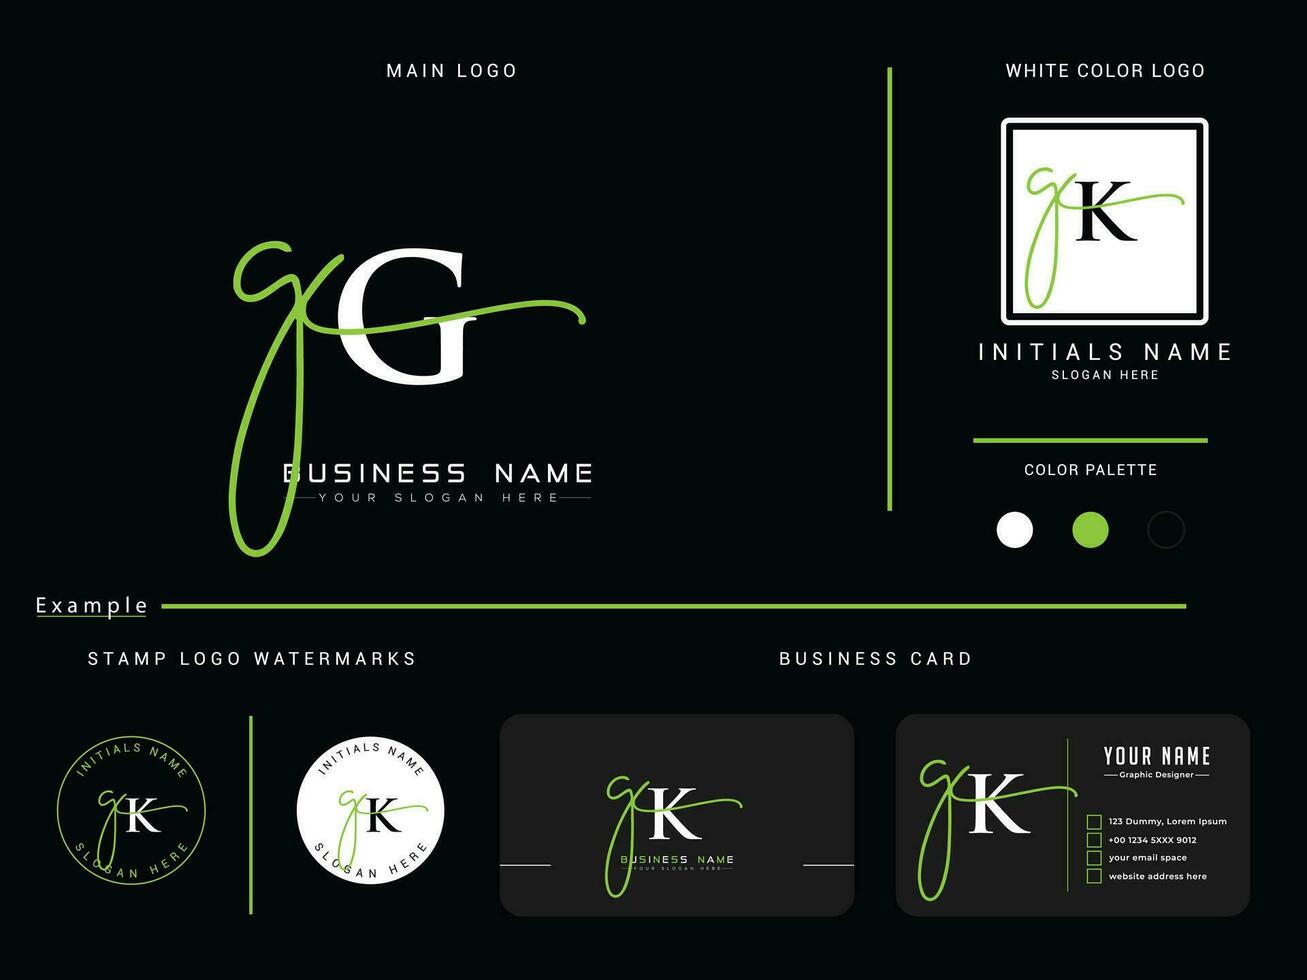 creativo gg firma vestir logo, inicial gg lujo logo icono vector para tienda